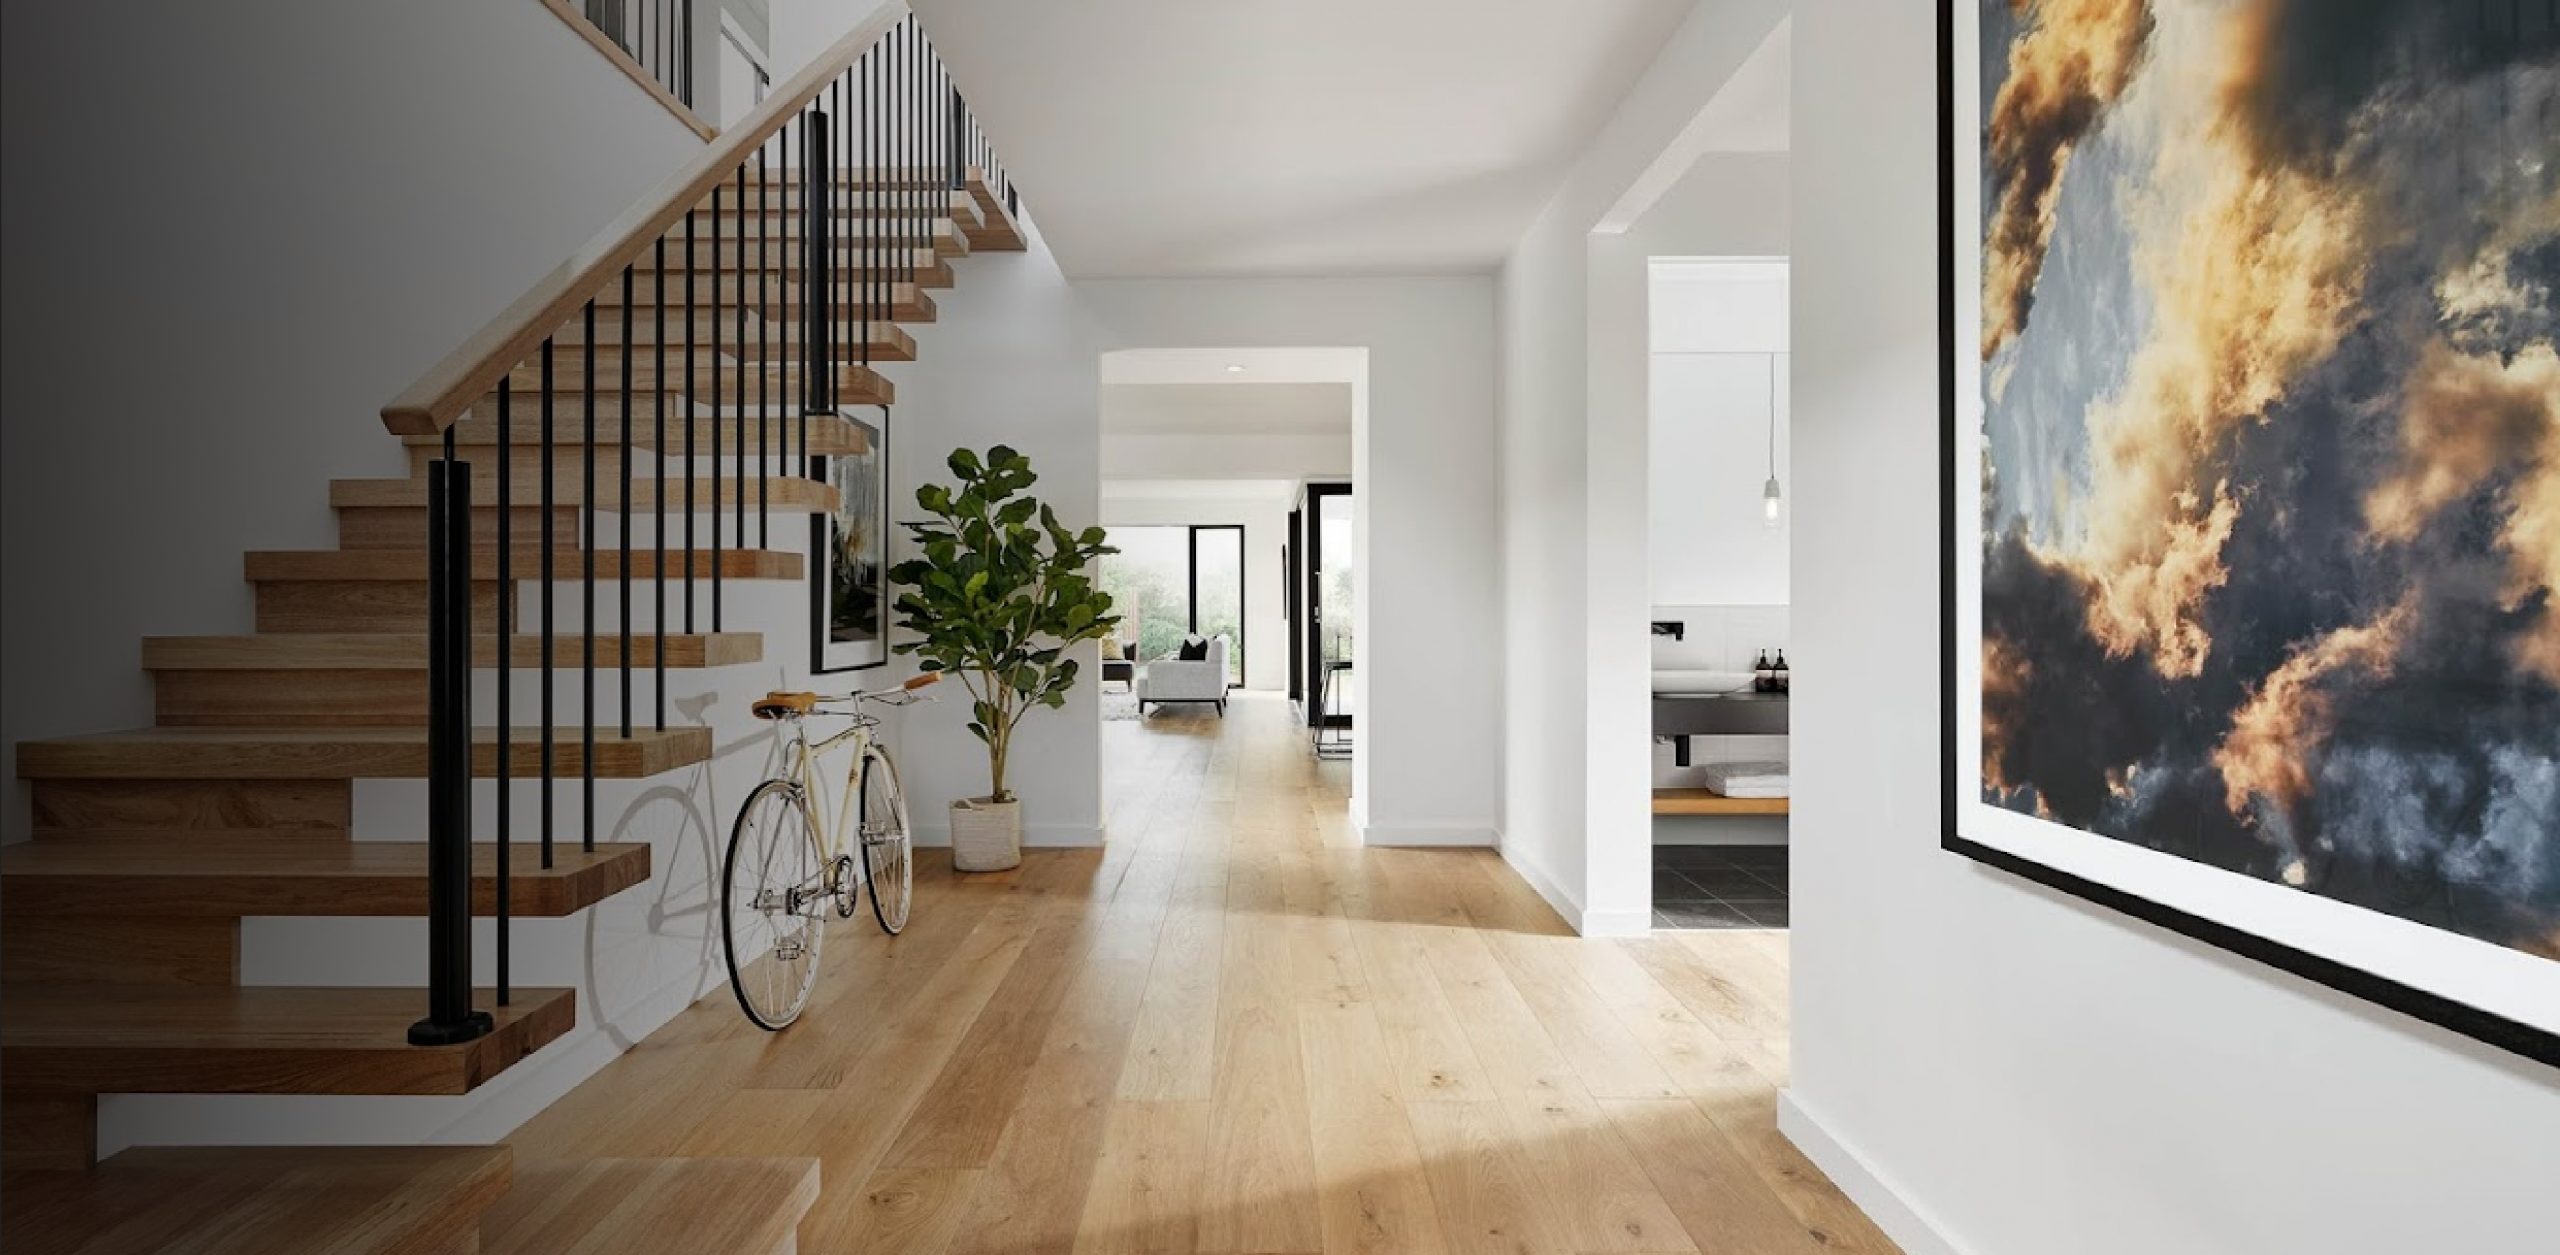 Entryway into modern home